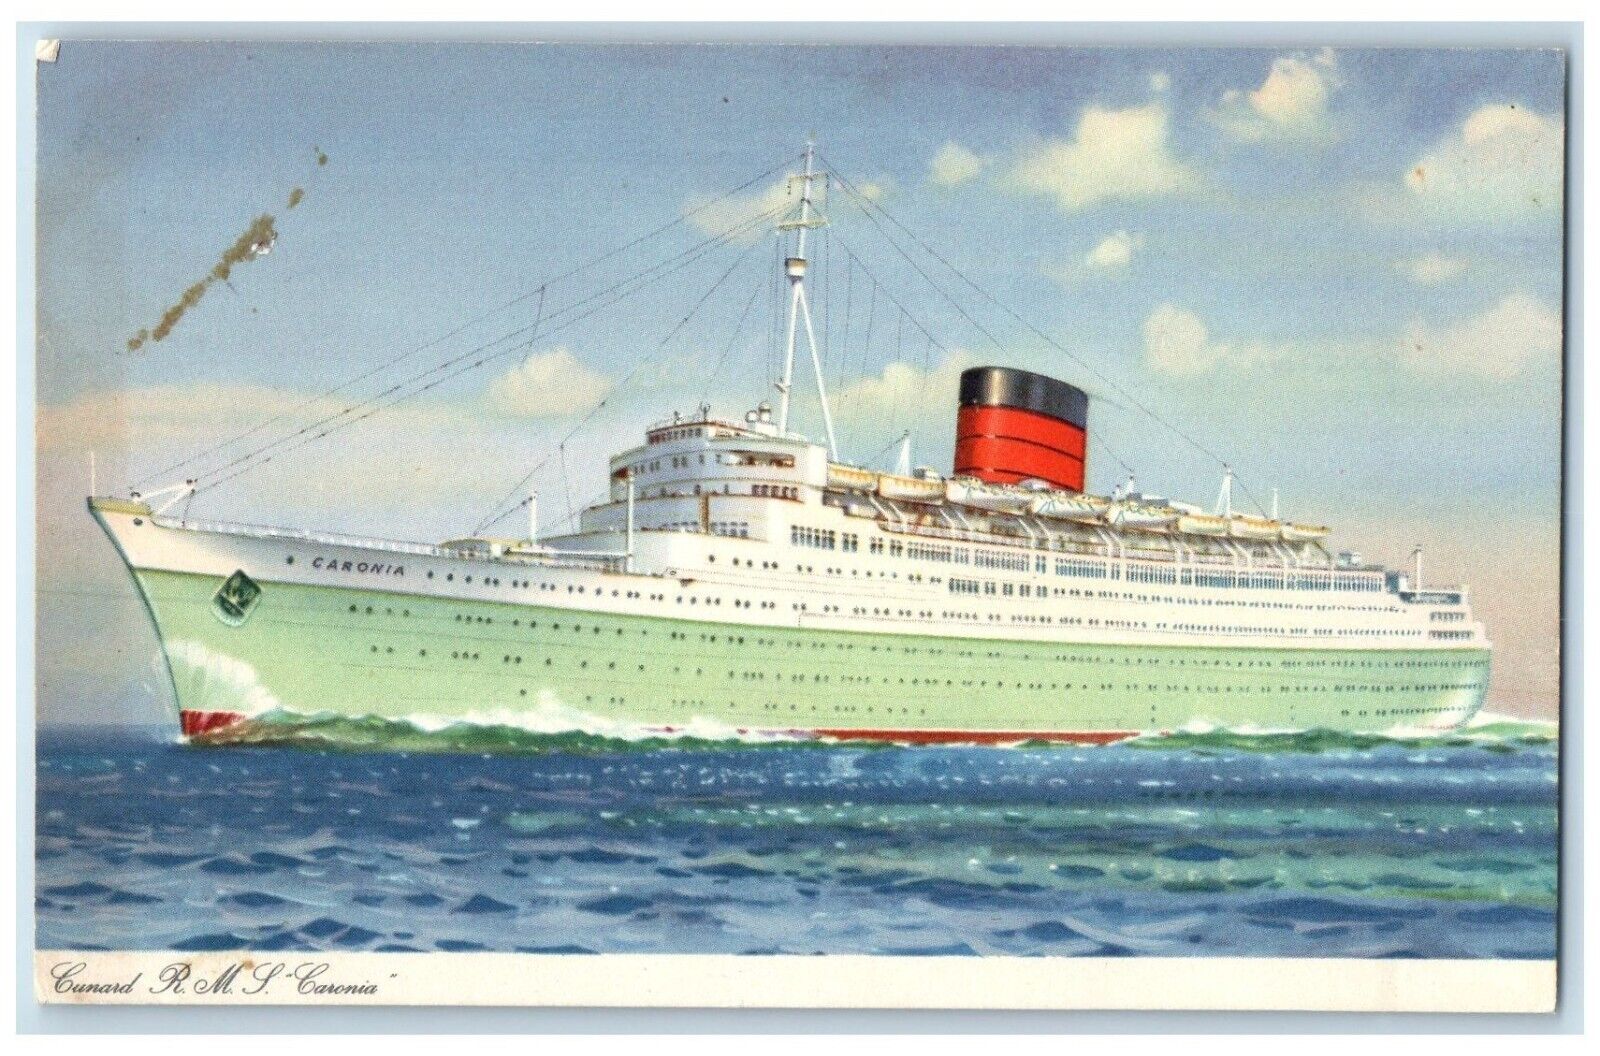 1953 Cunard RMJ Caronia Tom Maupin Travel Service Steamer Lawrence KS Postcard